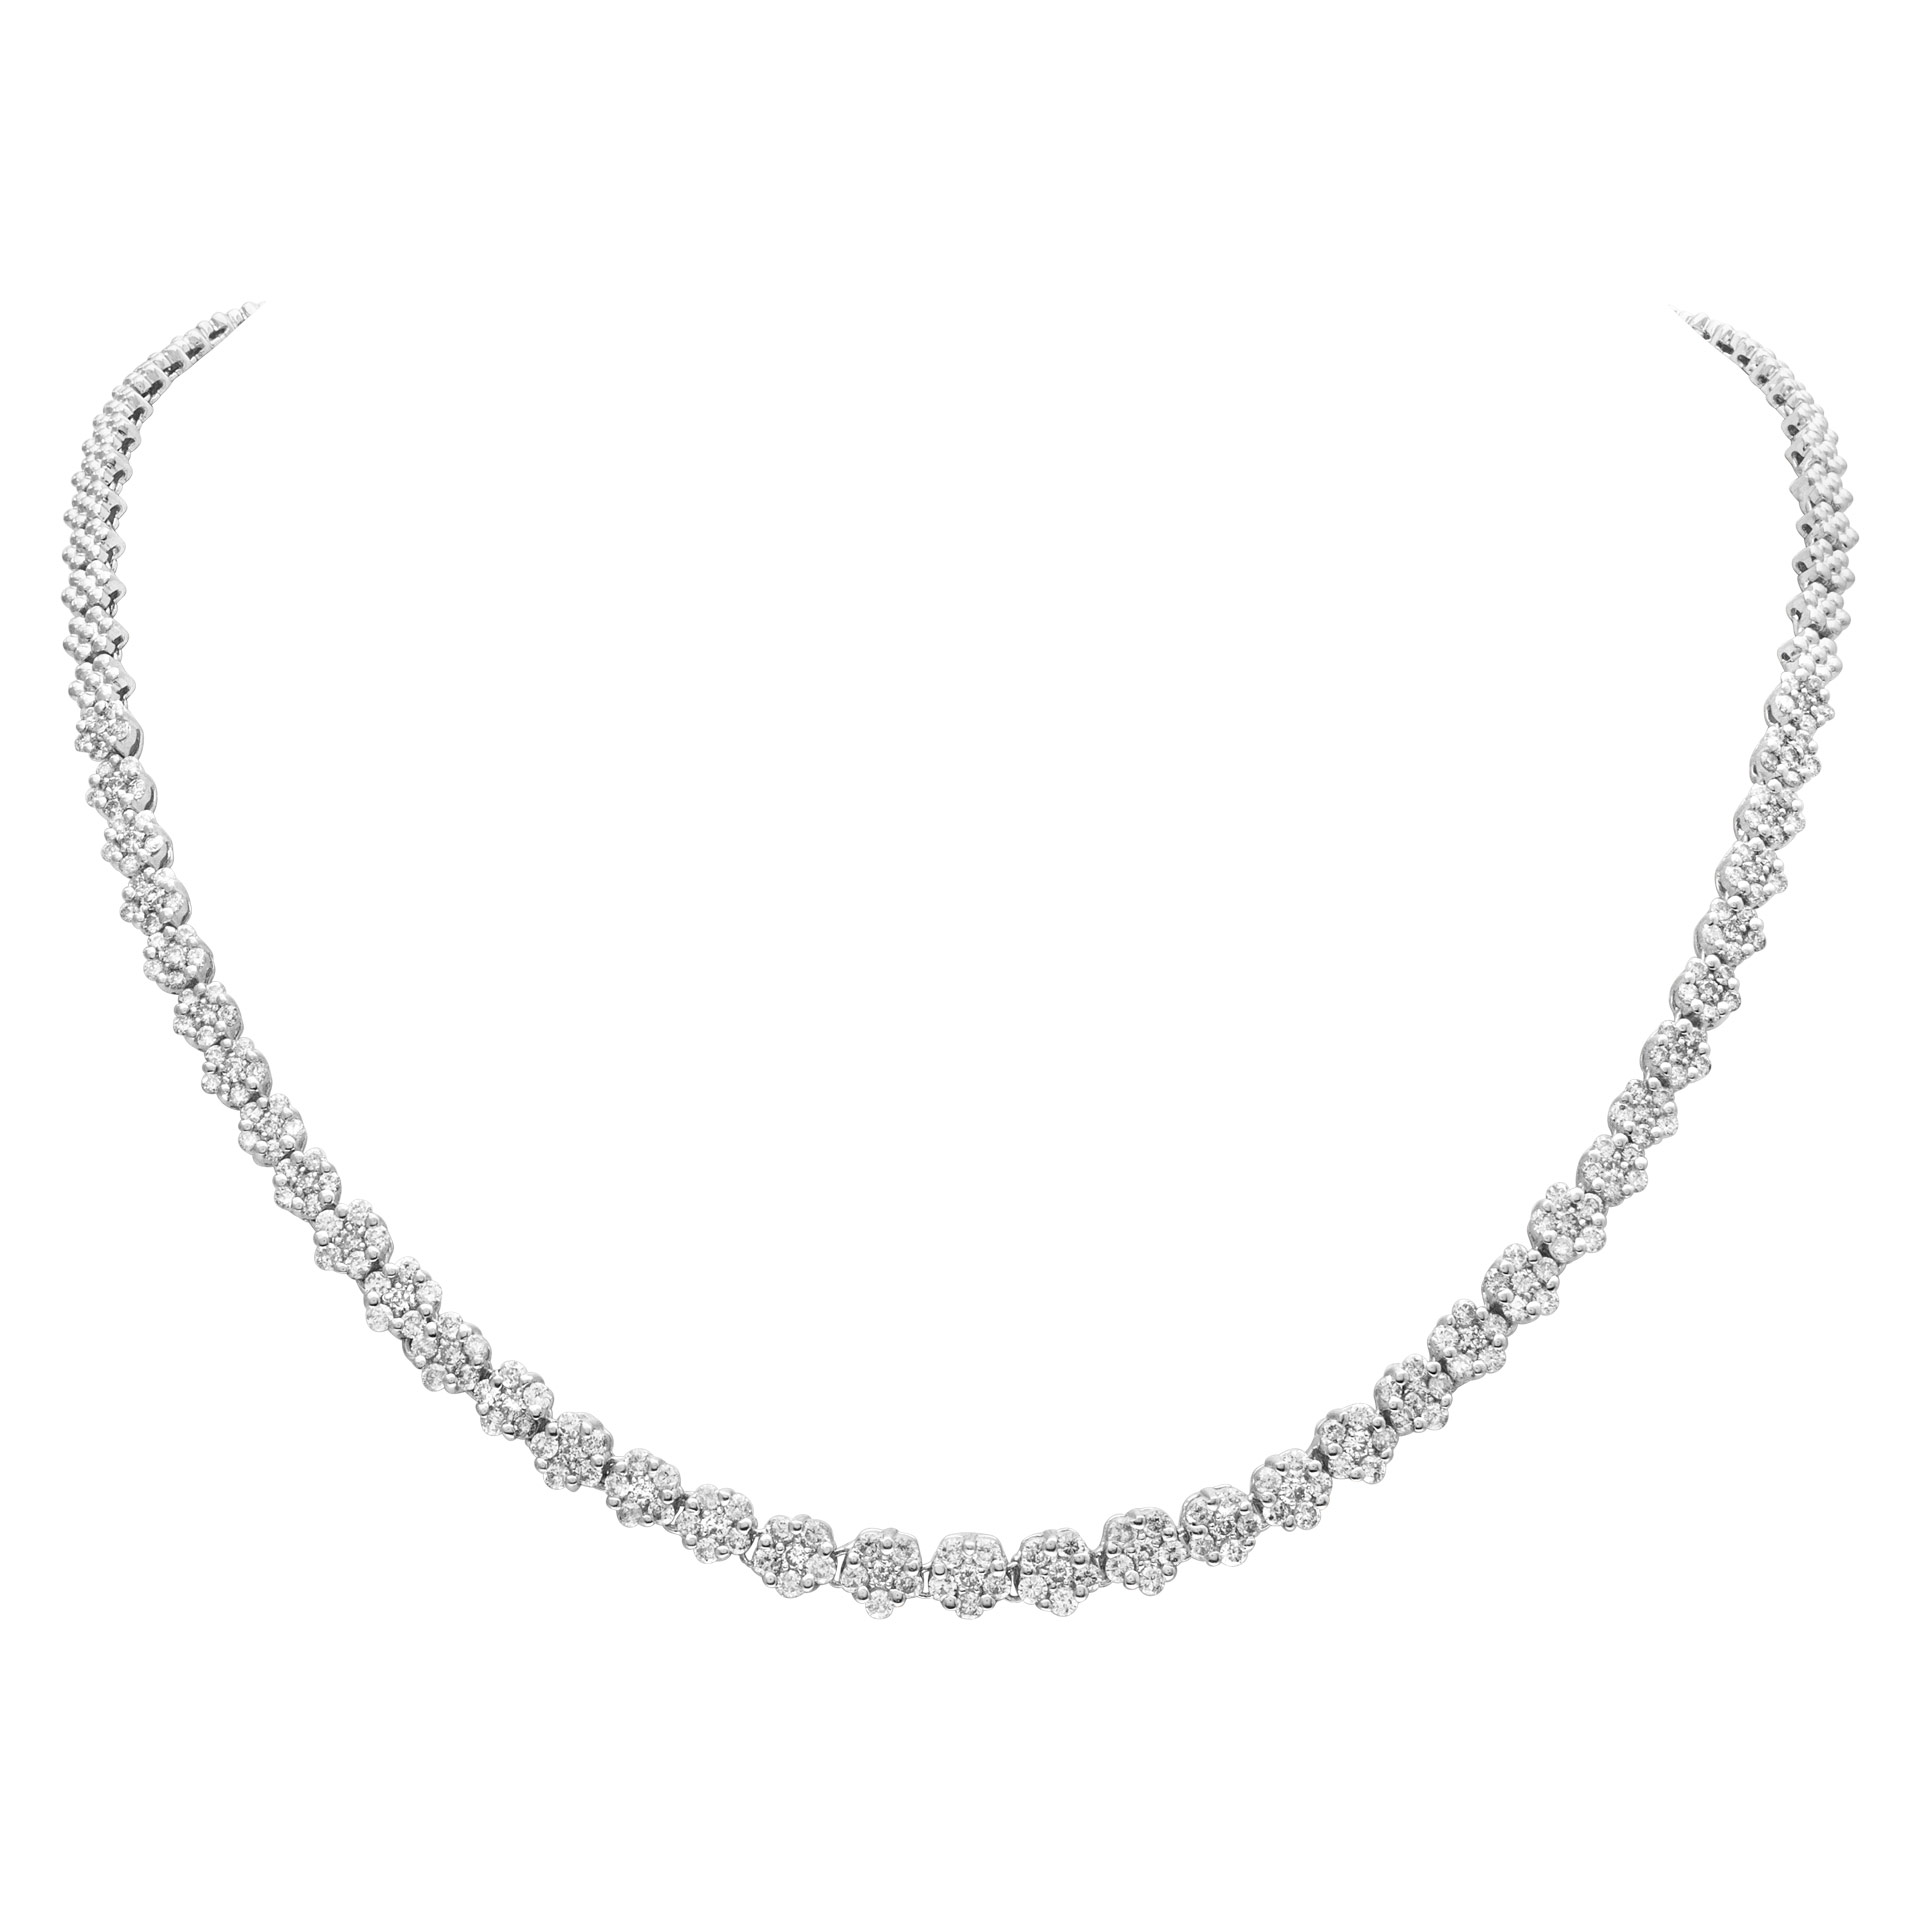 Flower design diamond necklace in 14k white gold. 4.00cts in round brilliant dia's